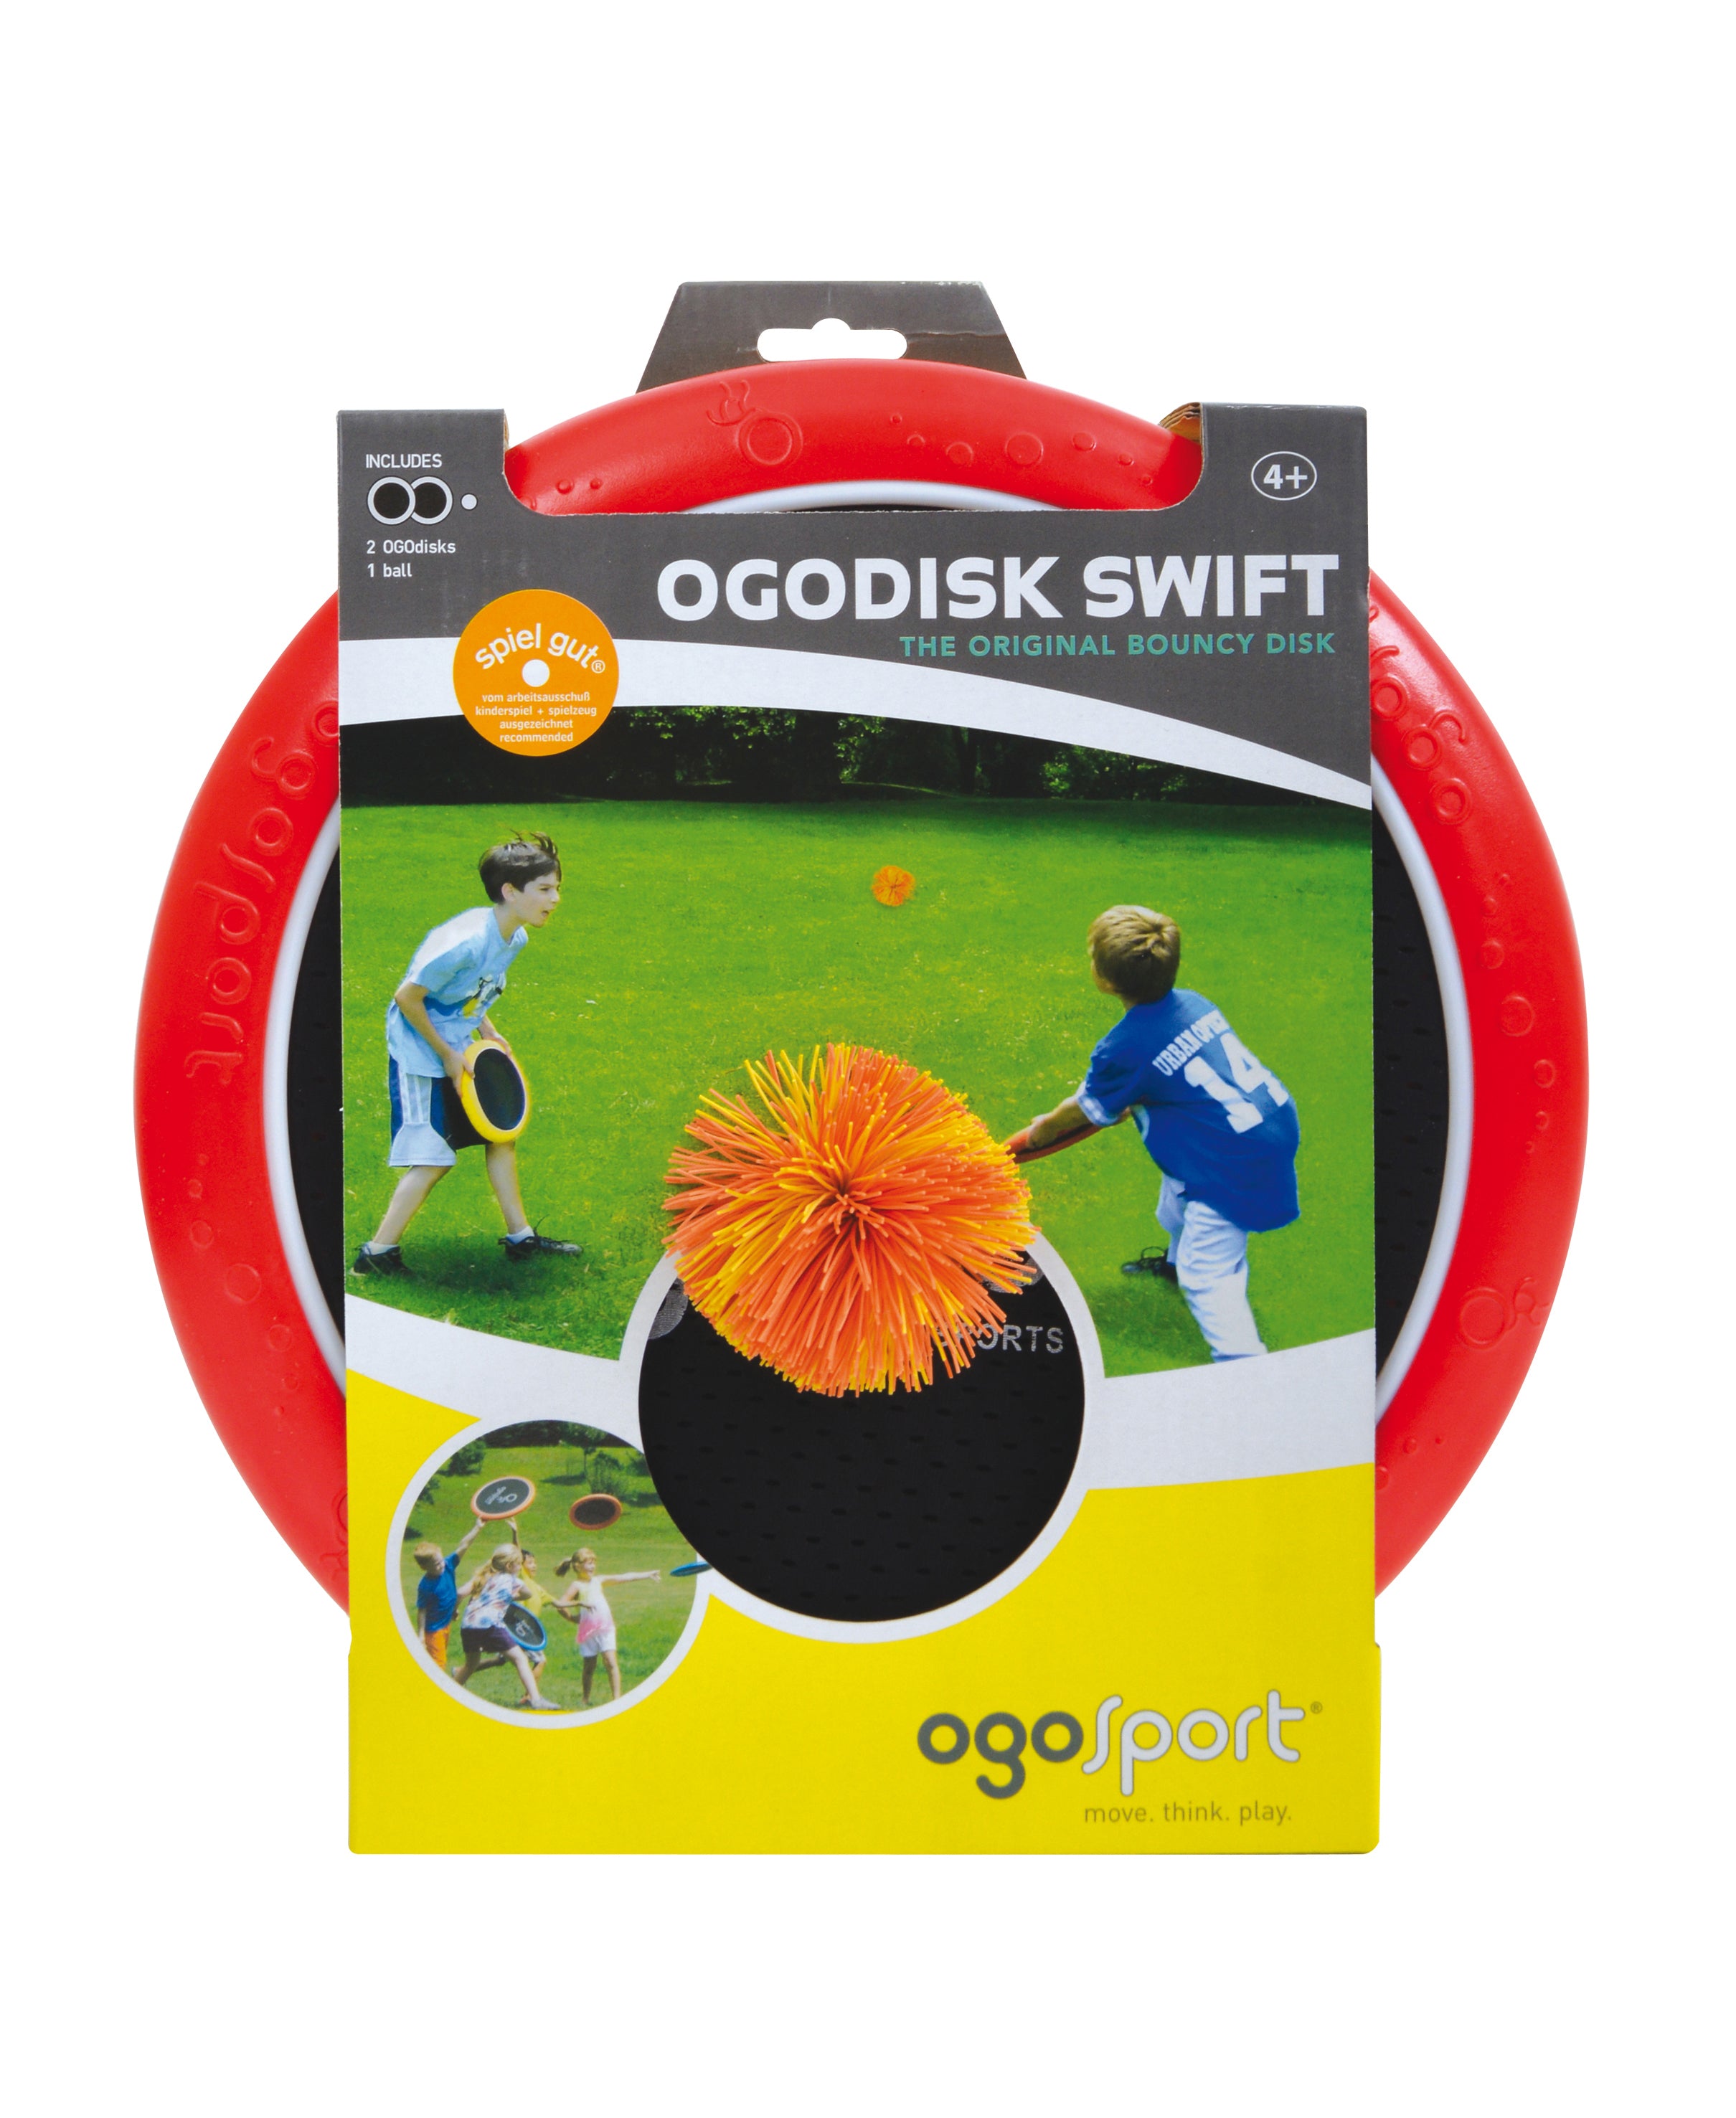 OGOSPORT Set, 2 Ogo Softdiscs +1 OGO Ball